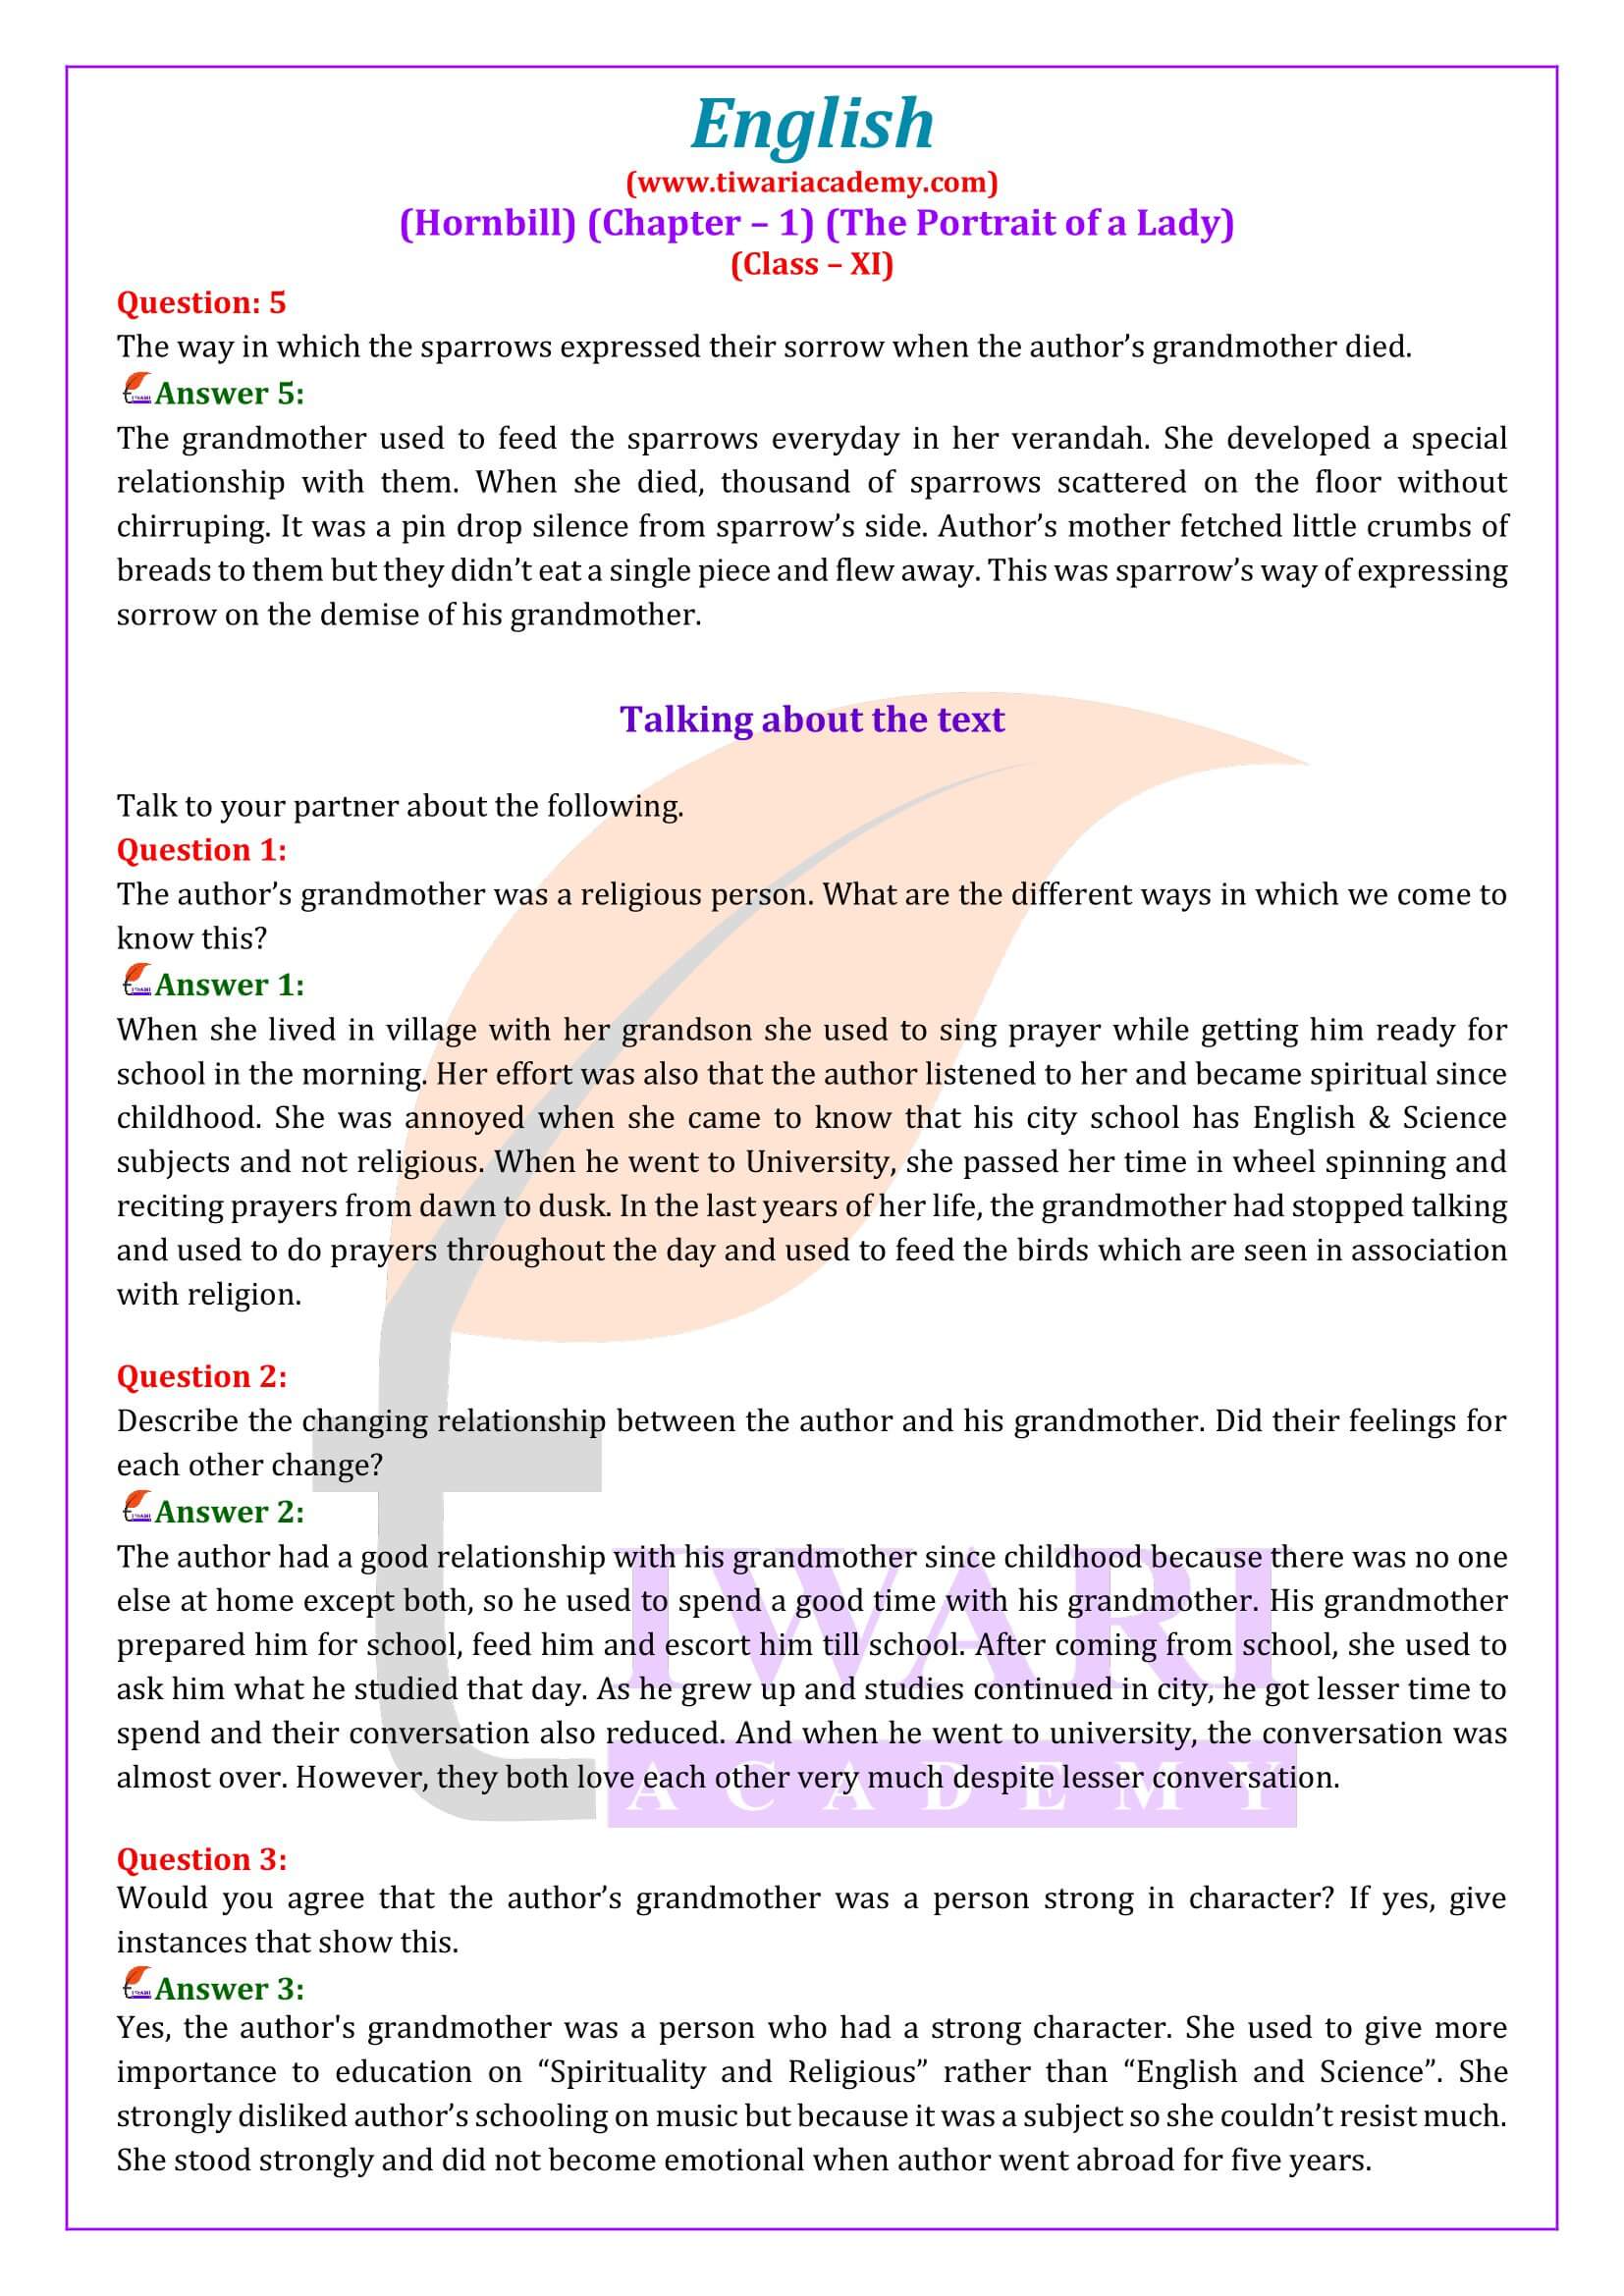 NCERT Solutions for Class 11 English Hornbill Chapter 1